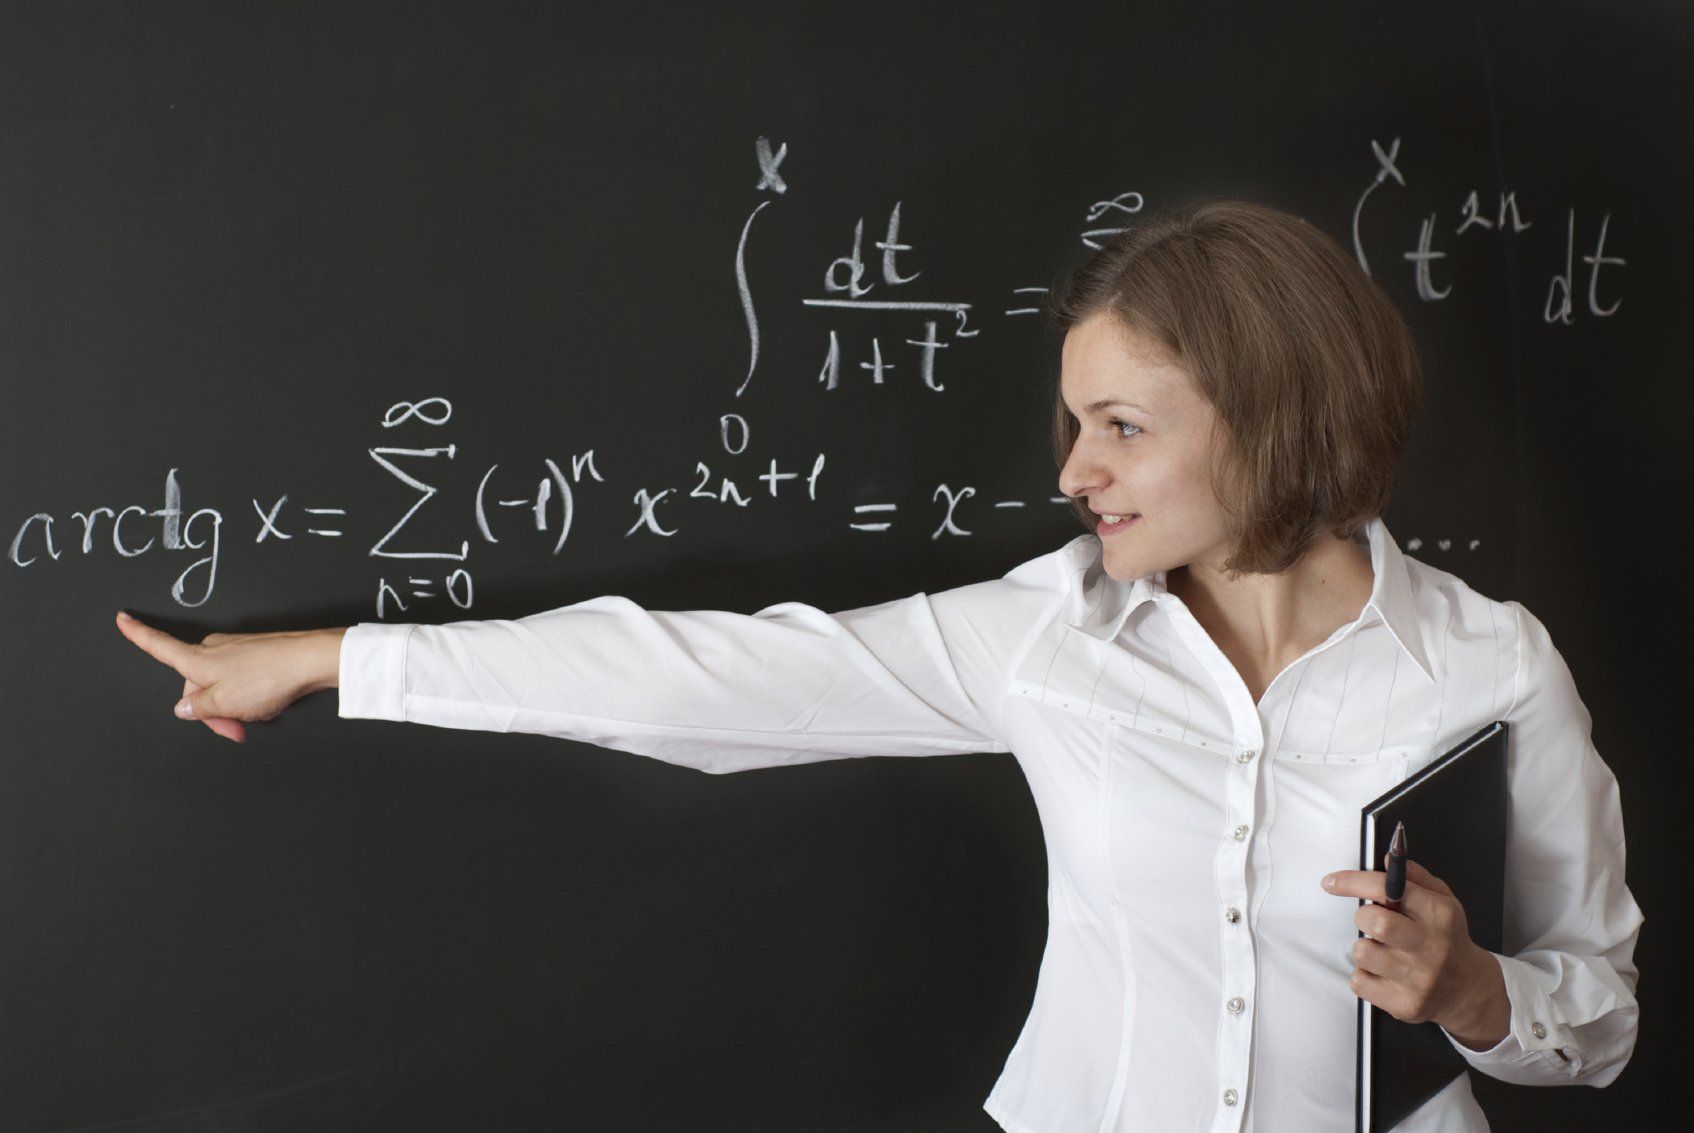 A female teacher in a white blouse explaining a complex mathematical formula on the blackboard.